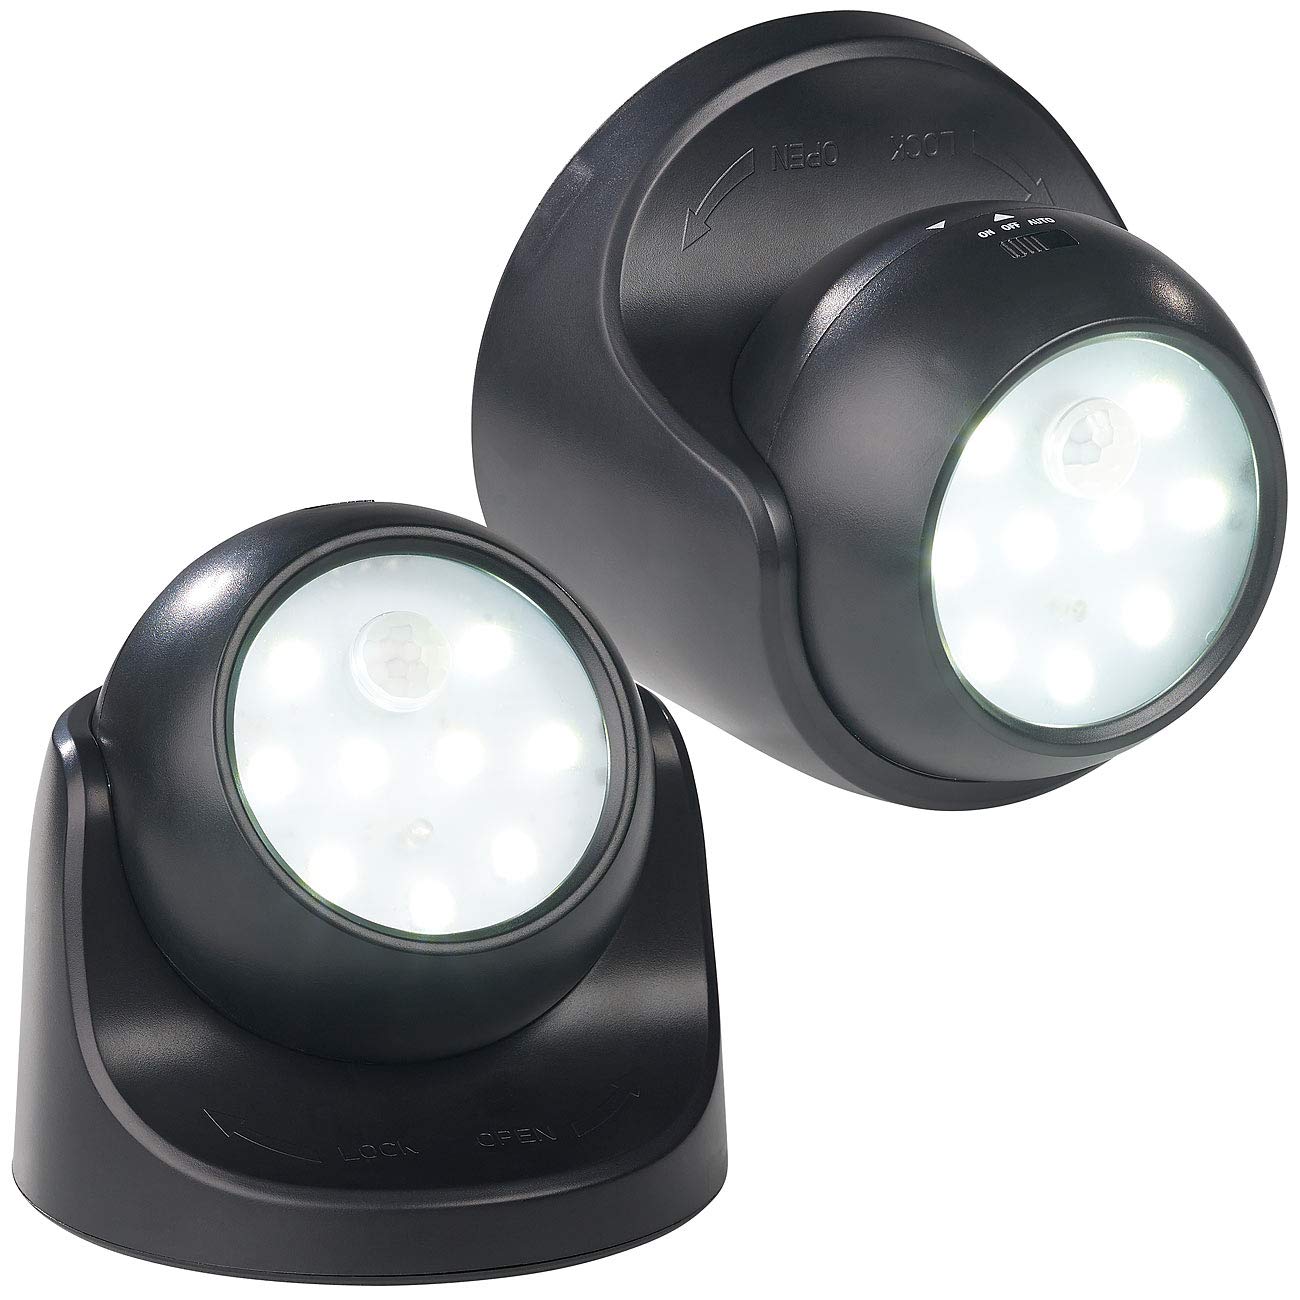 Luminea Lampe Batterie: 2er-Set kabellose LED-Strahler, Bewegungssensor, 360° drehbar,100 lm (Kabellose LED Leuchte, LED Lampe Batterie, Lampen Bewegungsmelder)